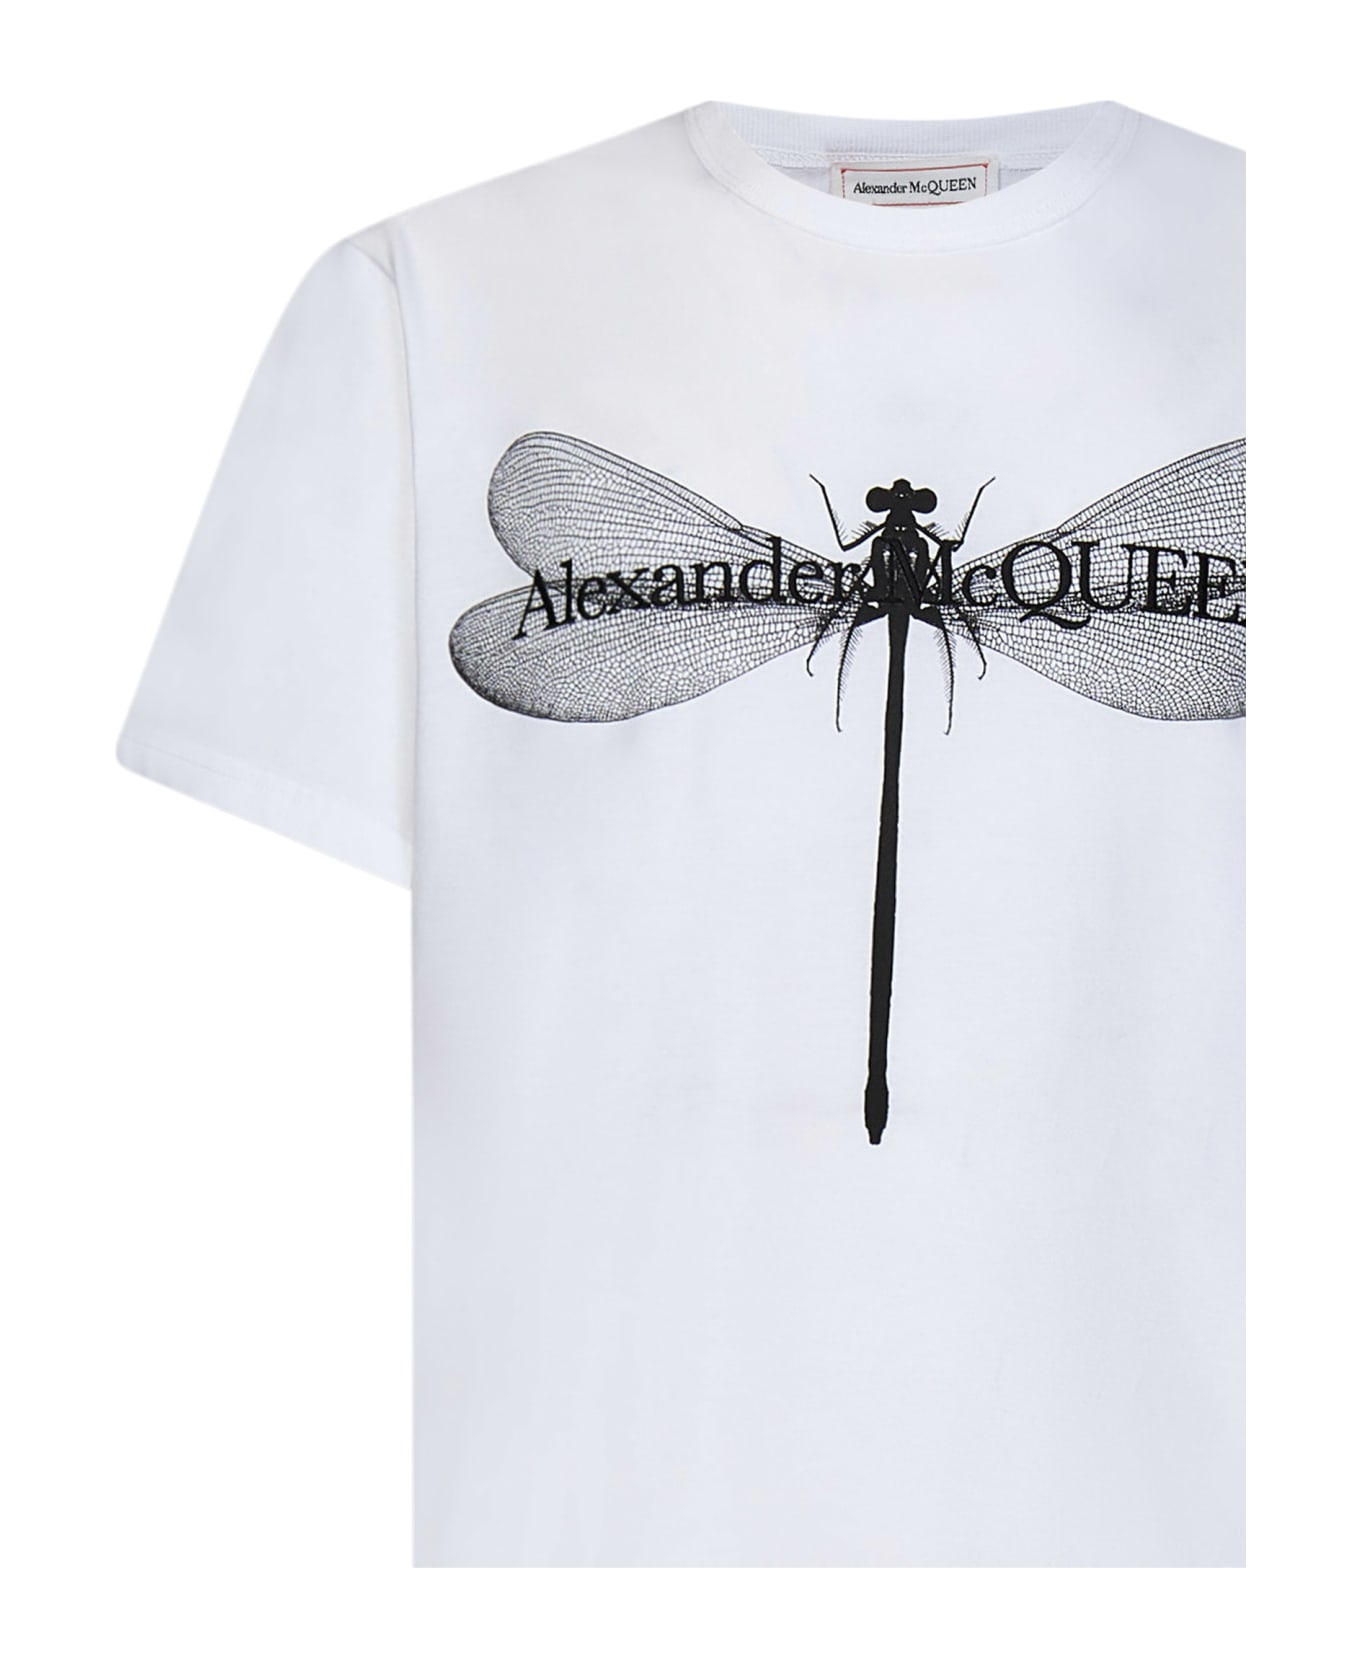 Alexander McQueen Dragonfly T-shirt - White